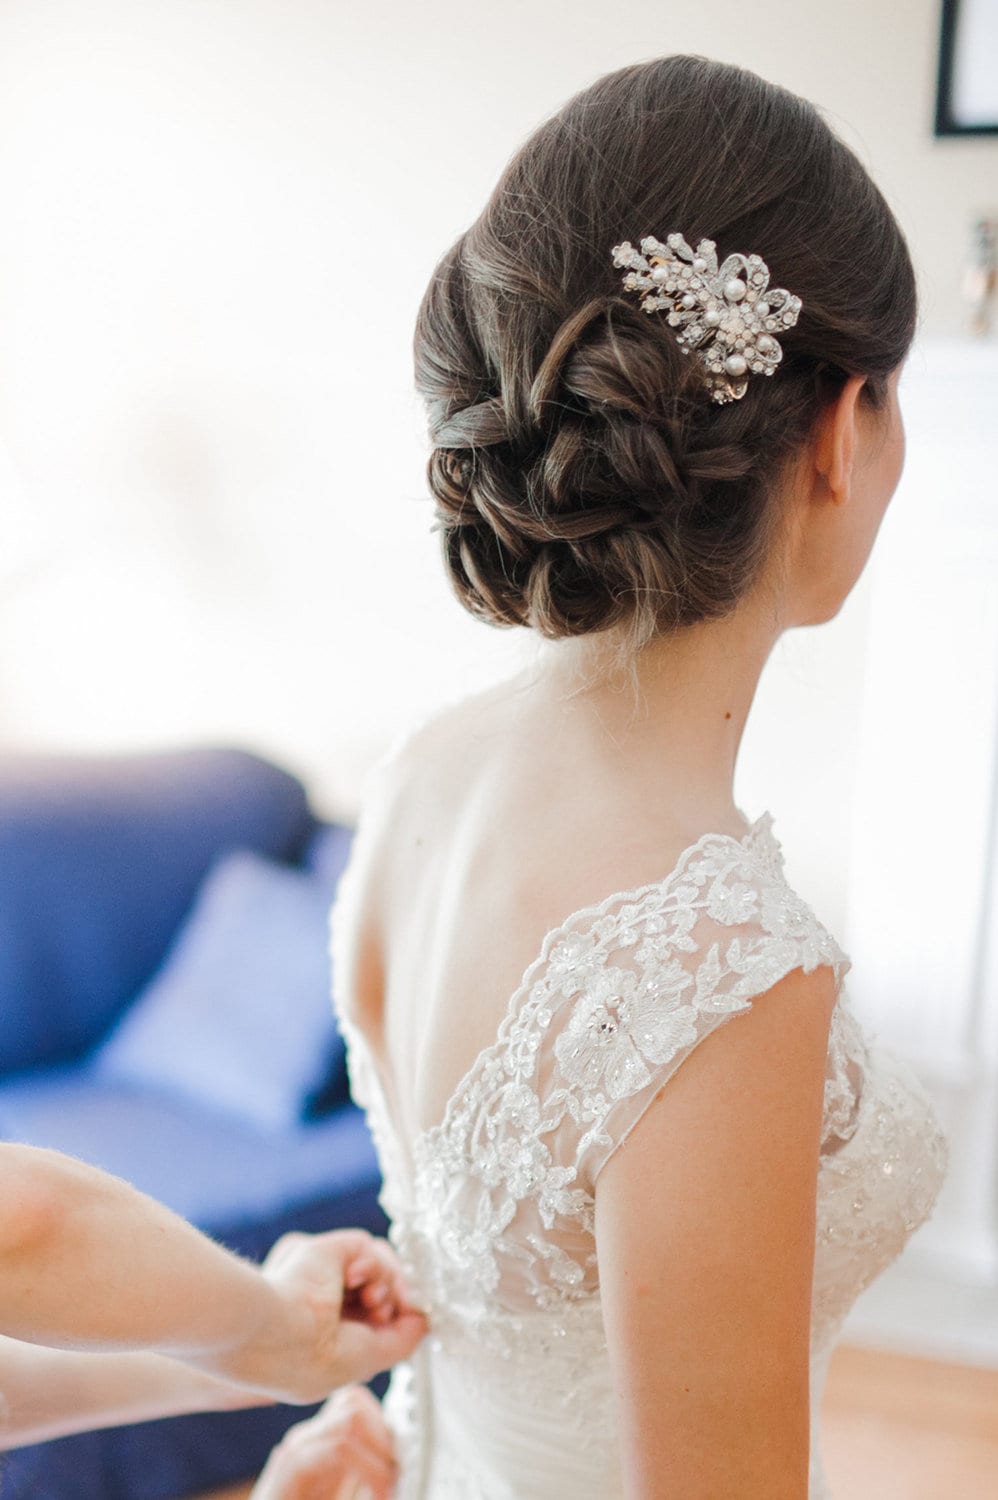 Bridal hair comb flowers gold pearls rhinestones bride prom bridesmaids Weddings Accessories Hair Accessories Decorative Combs 